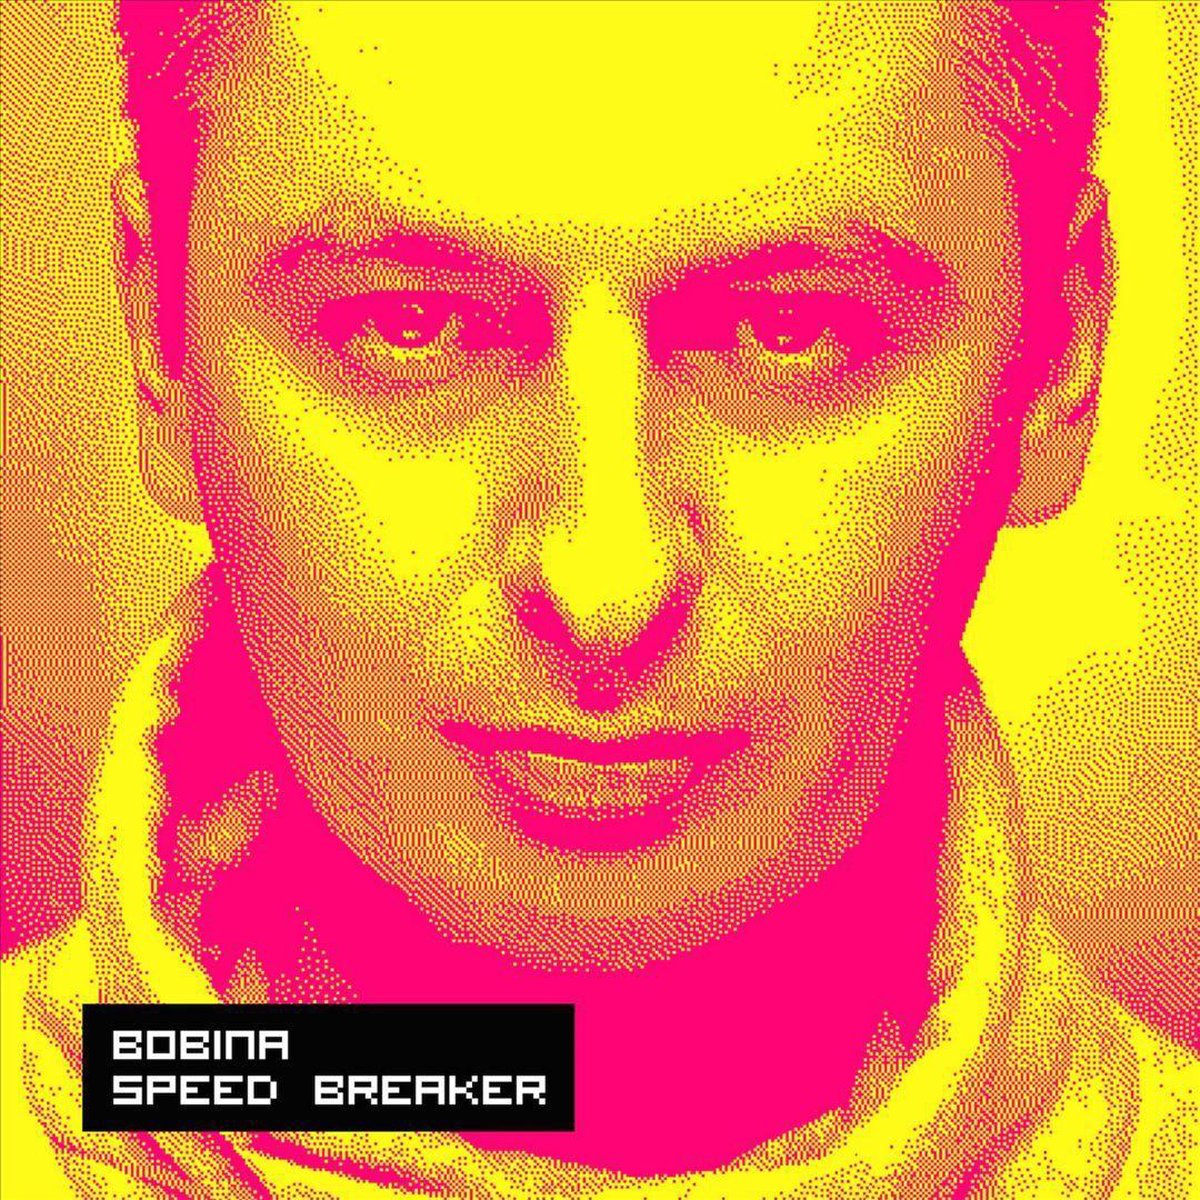 Speed Breaker - Bobina